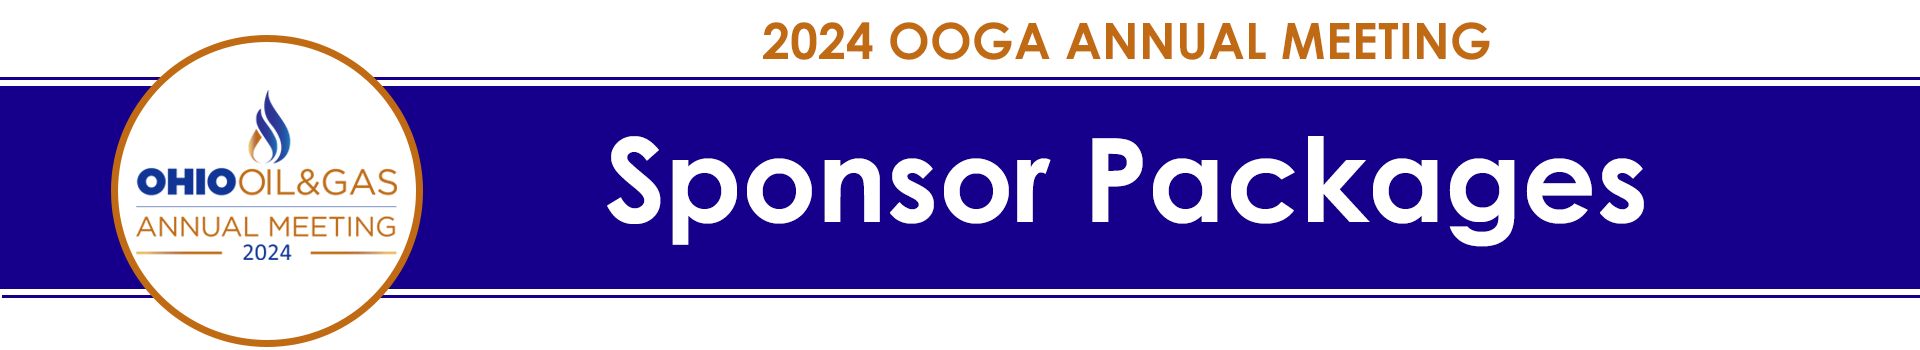 2024 OOGA AM Sponsor Packages banner